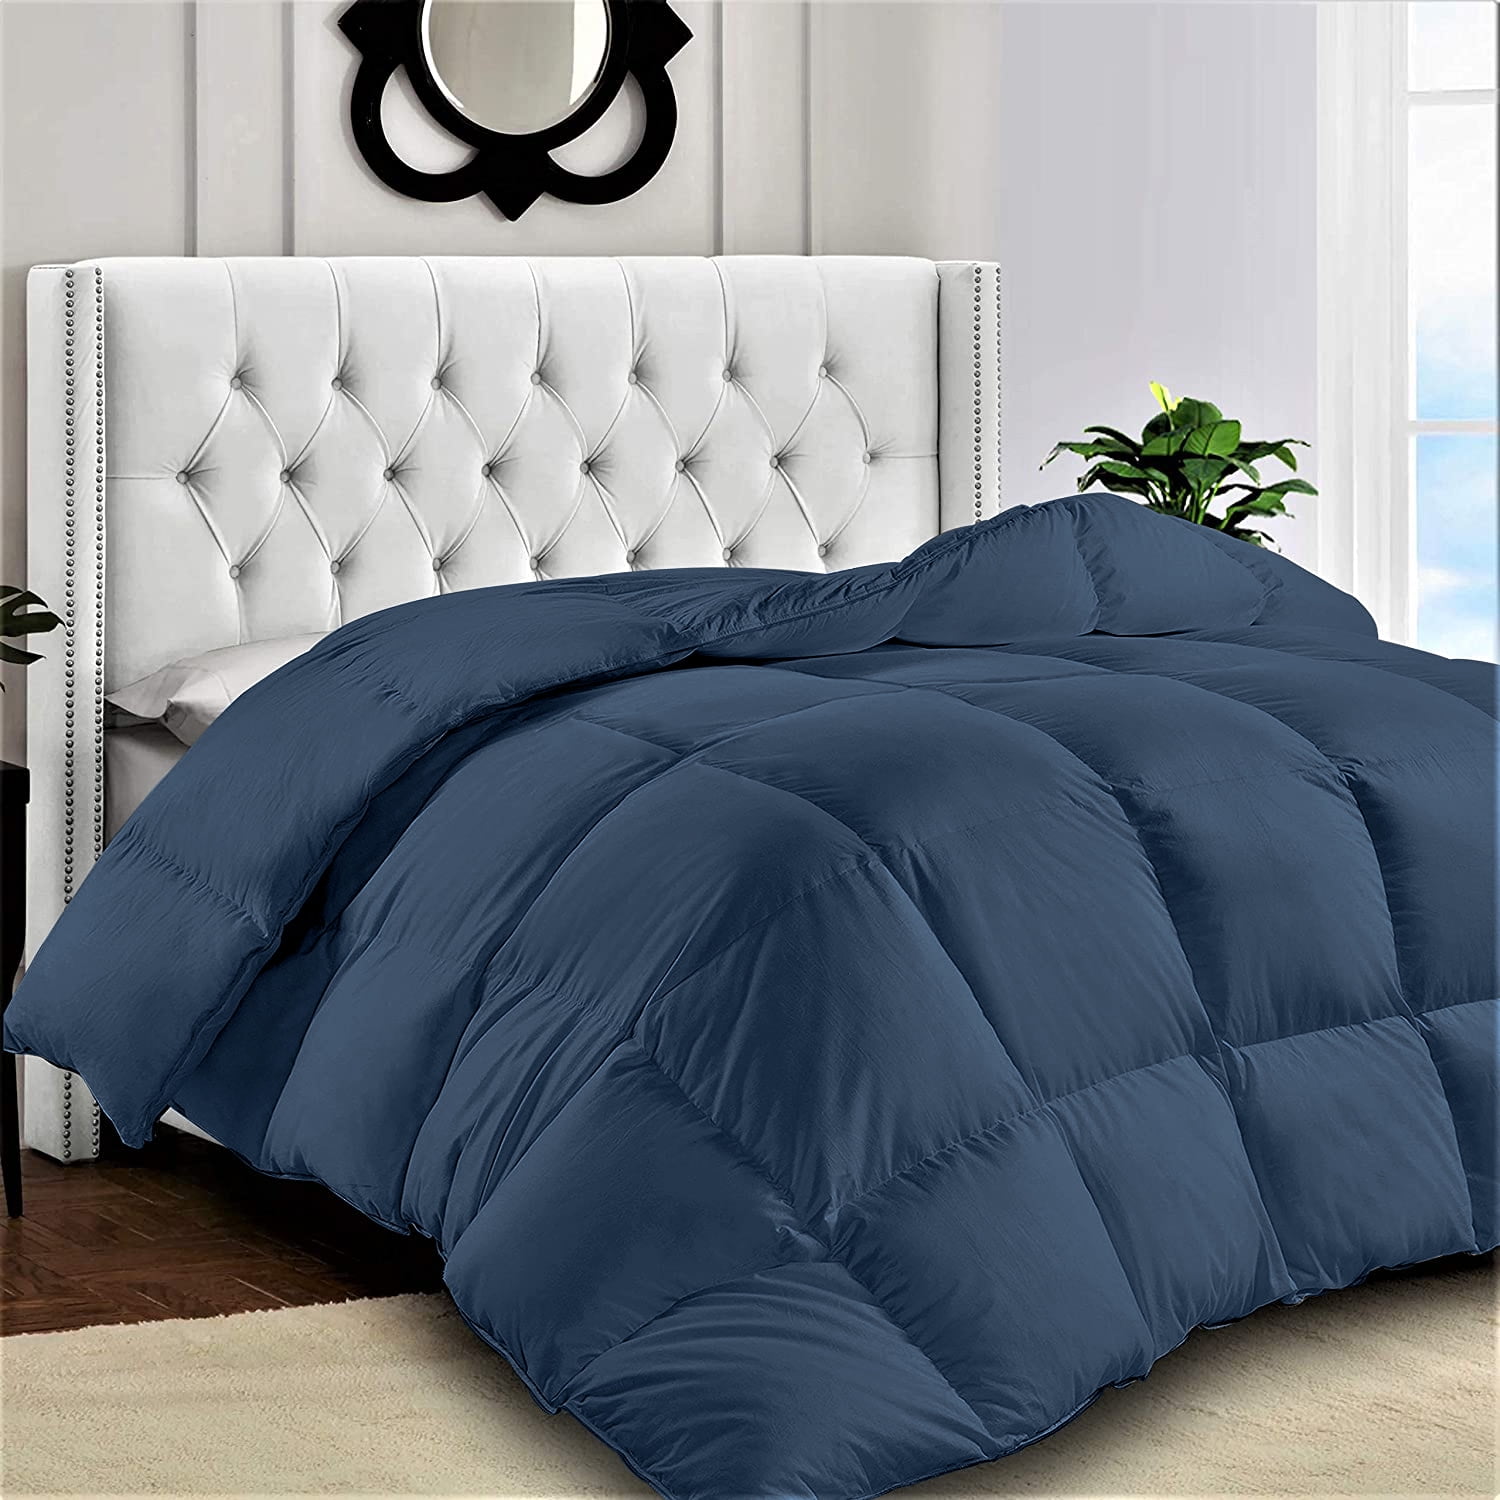 Details about   Seersucker Queen Comforter Set 3PC All Season Reversible Down Alternative Quilt 